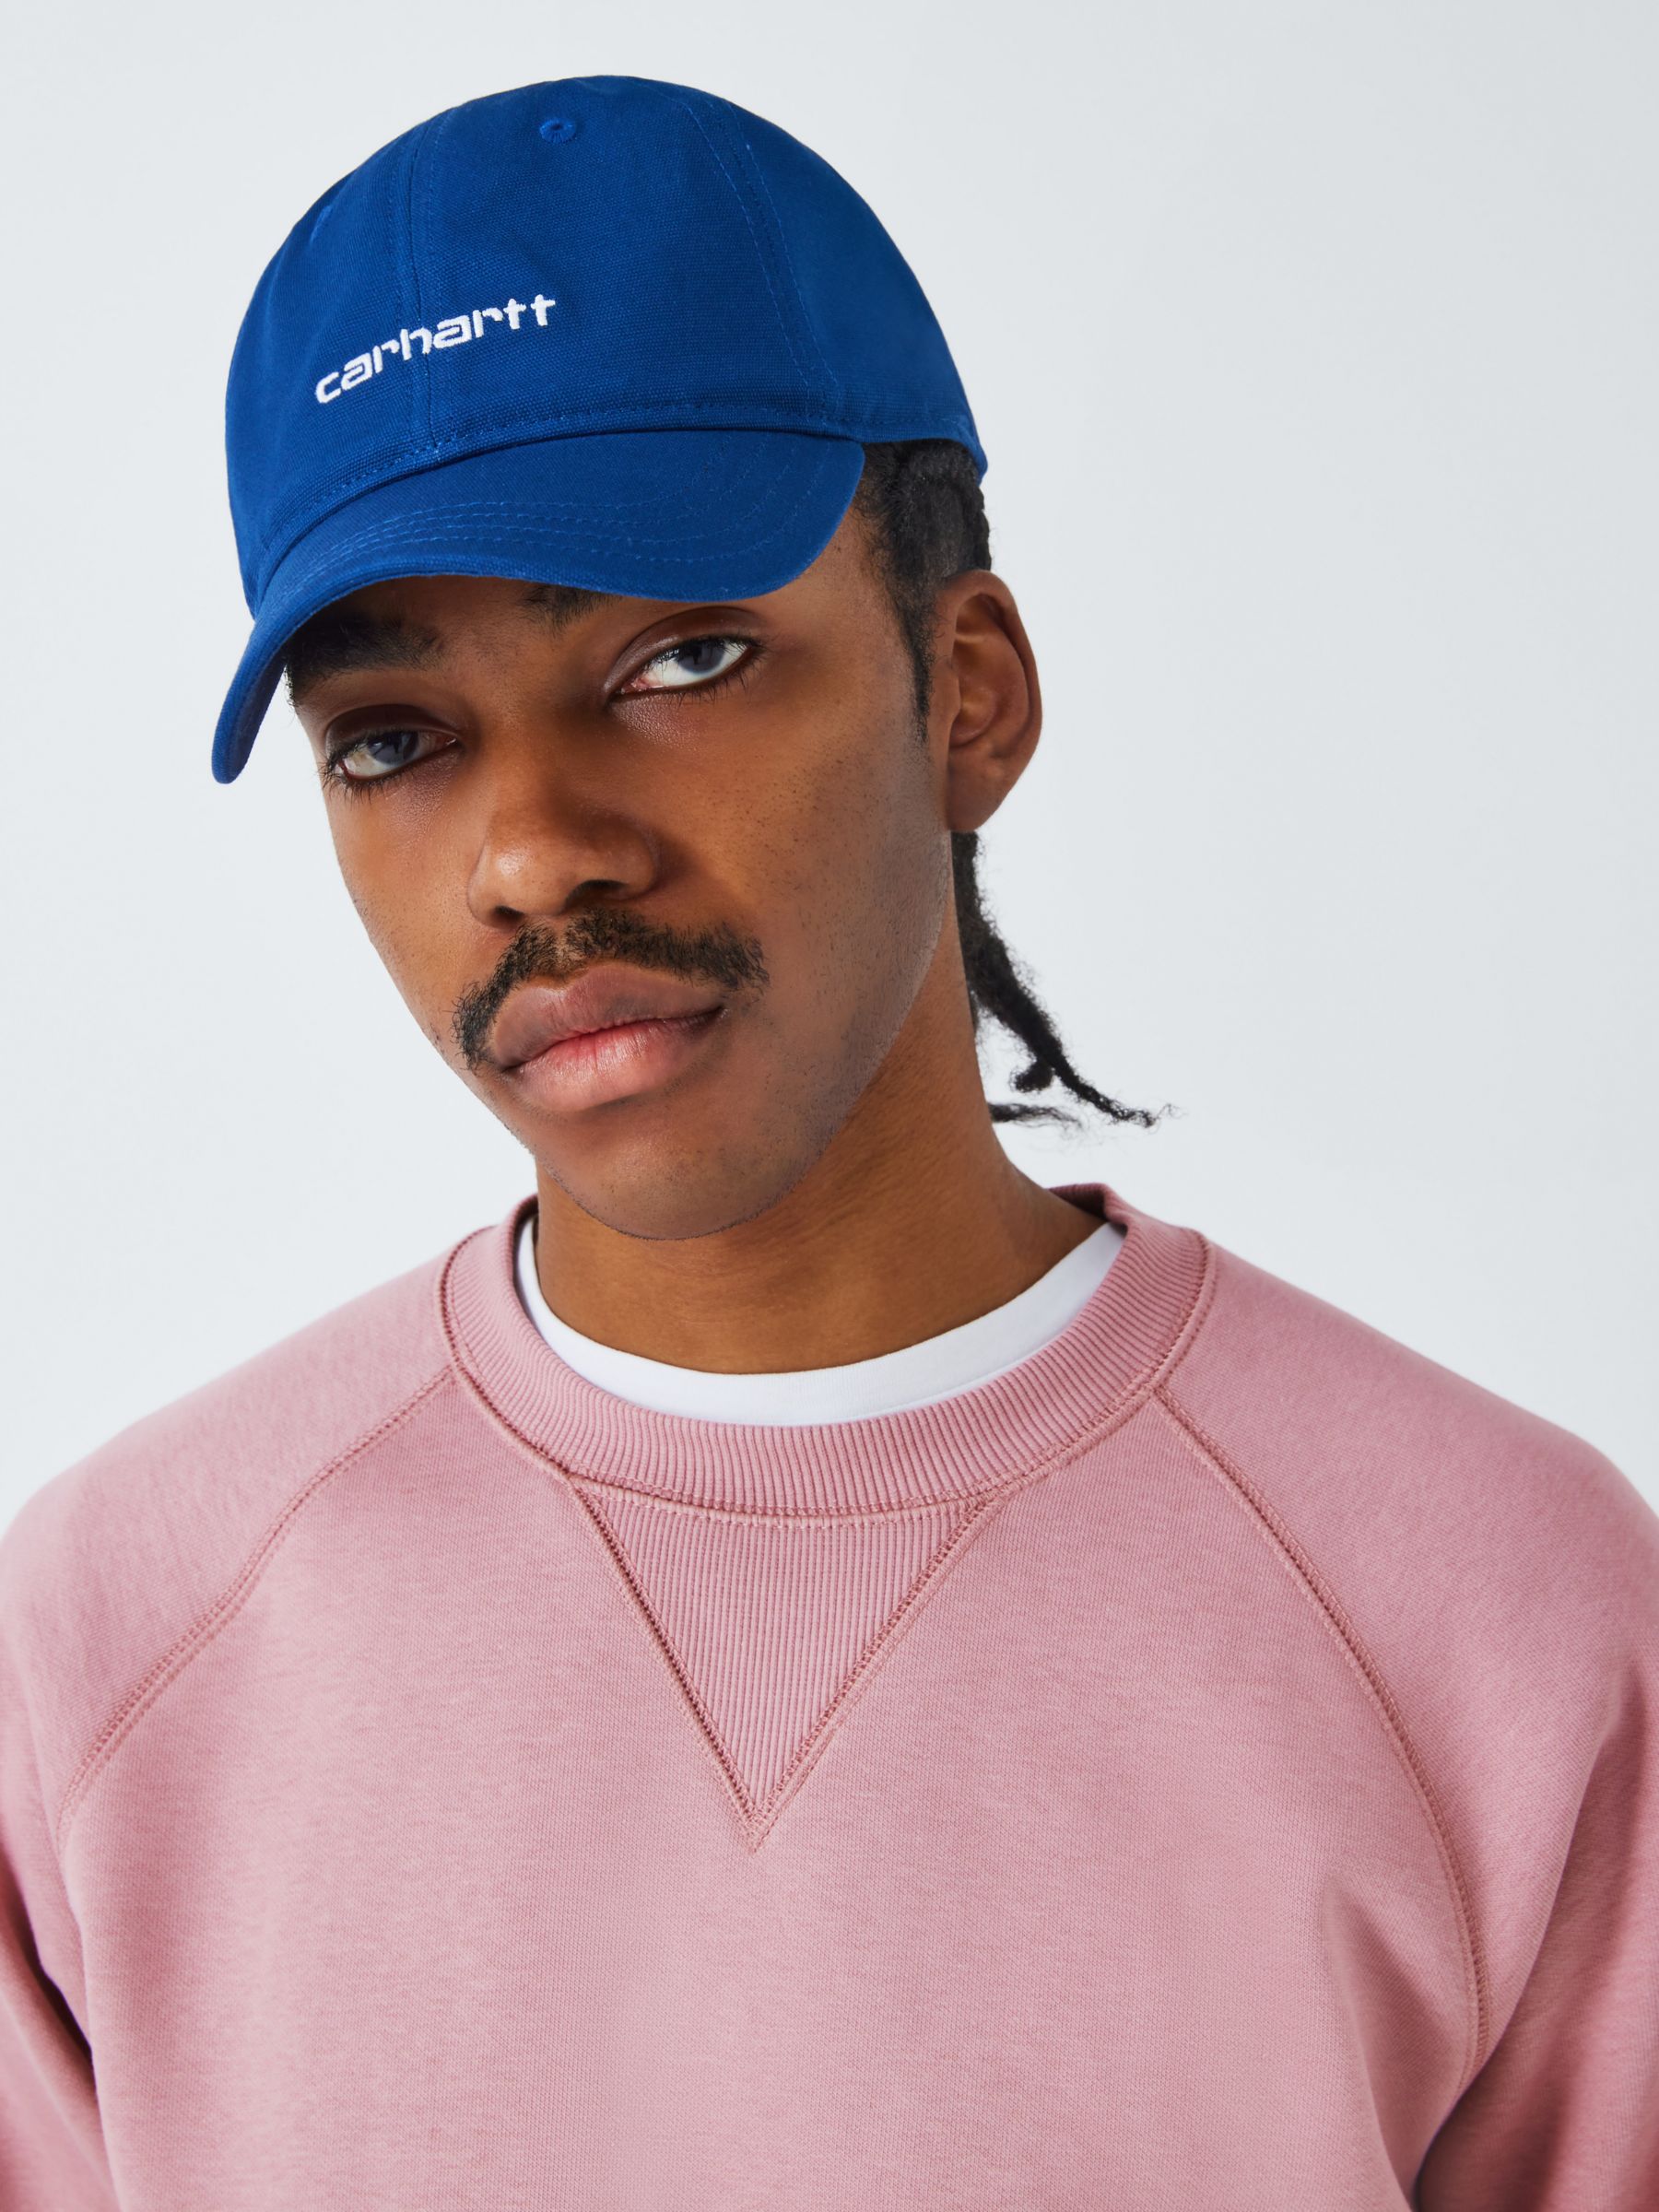 Carhartt WIP Chase Regular Fit Sweatshirt, Glassy Pink, S